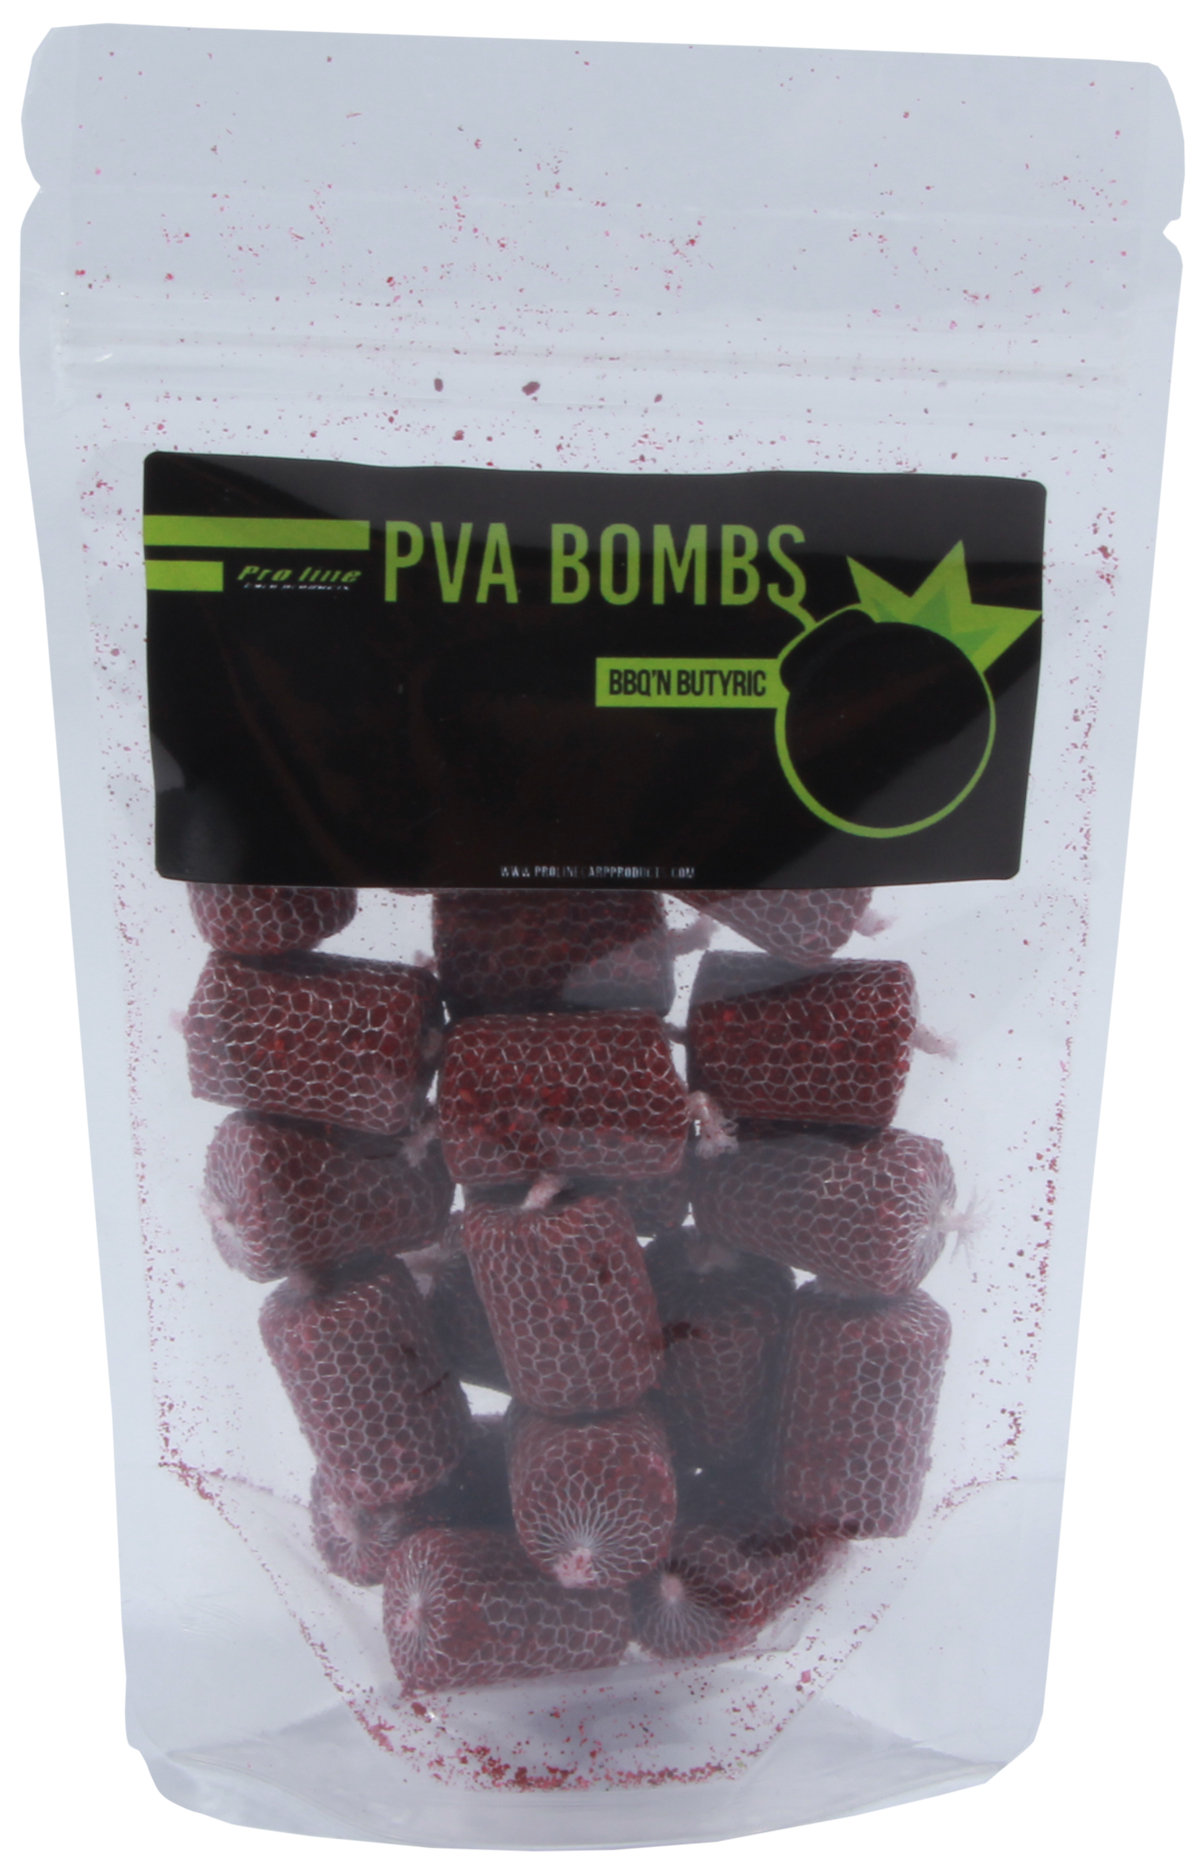 Pro Line PVA Bombs